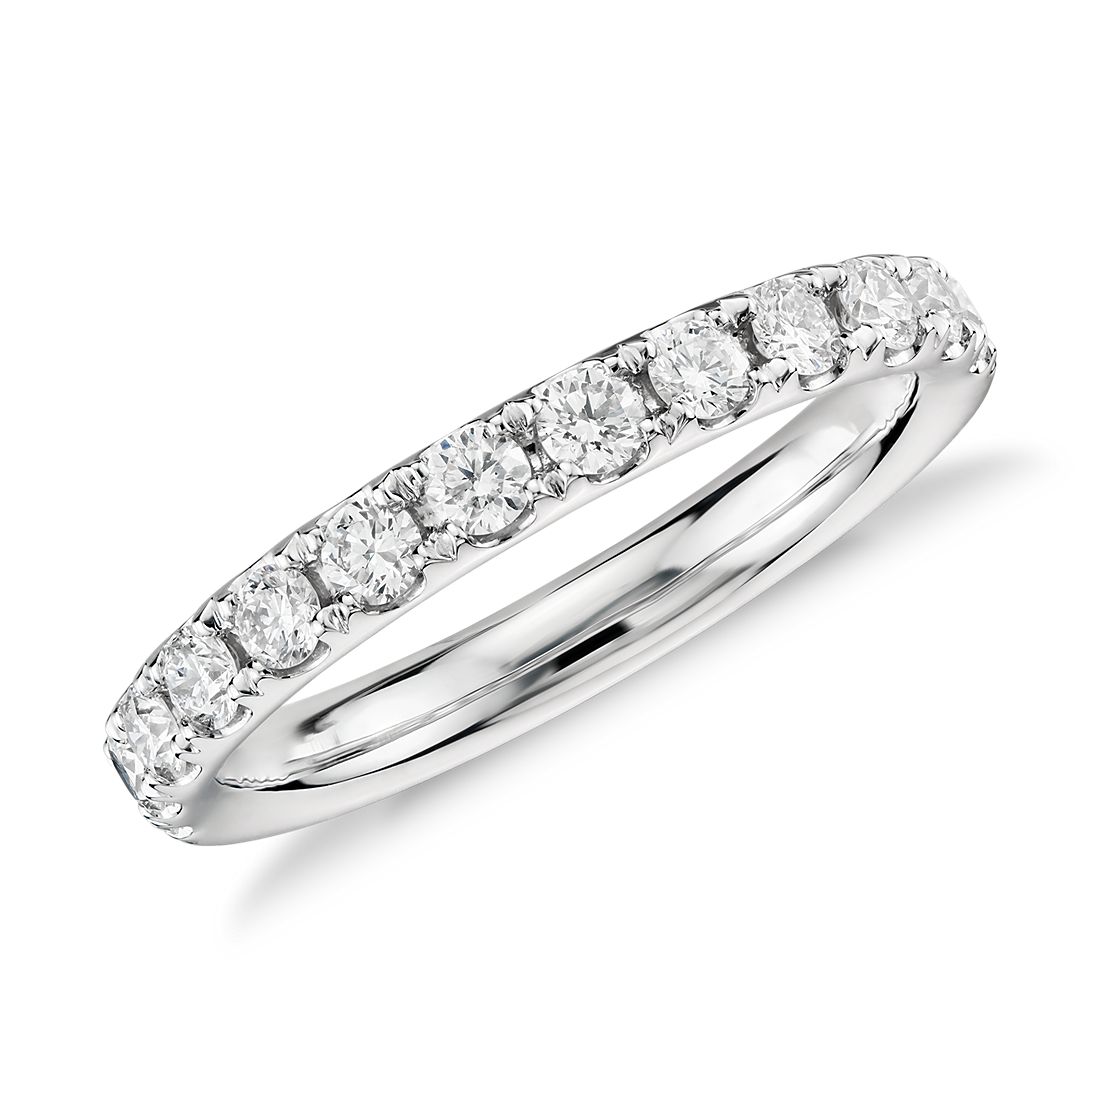 Riviera Pavé Diamond Engagement Ring in 14k White Gold 